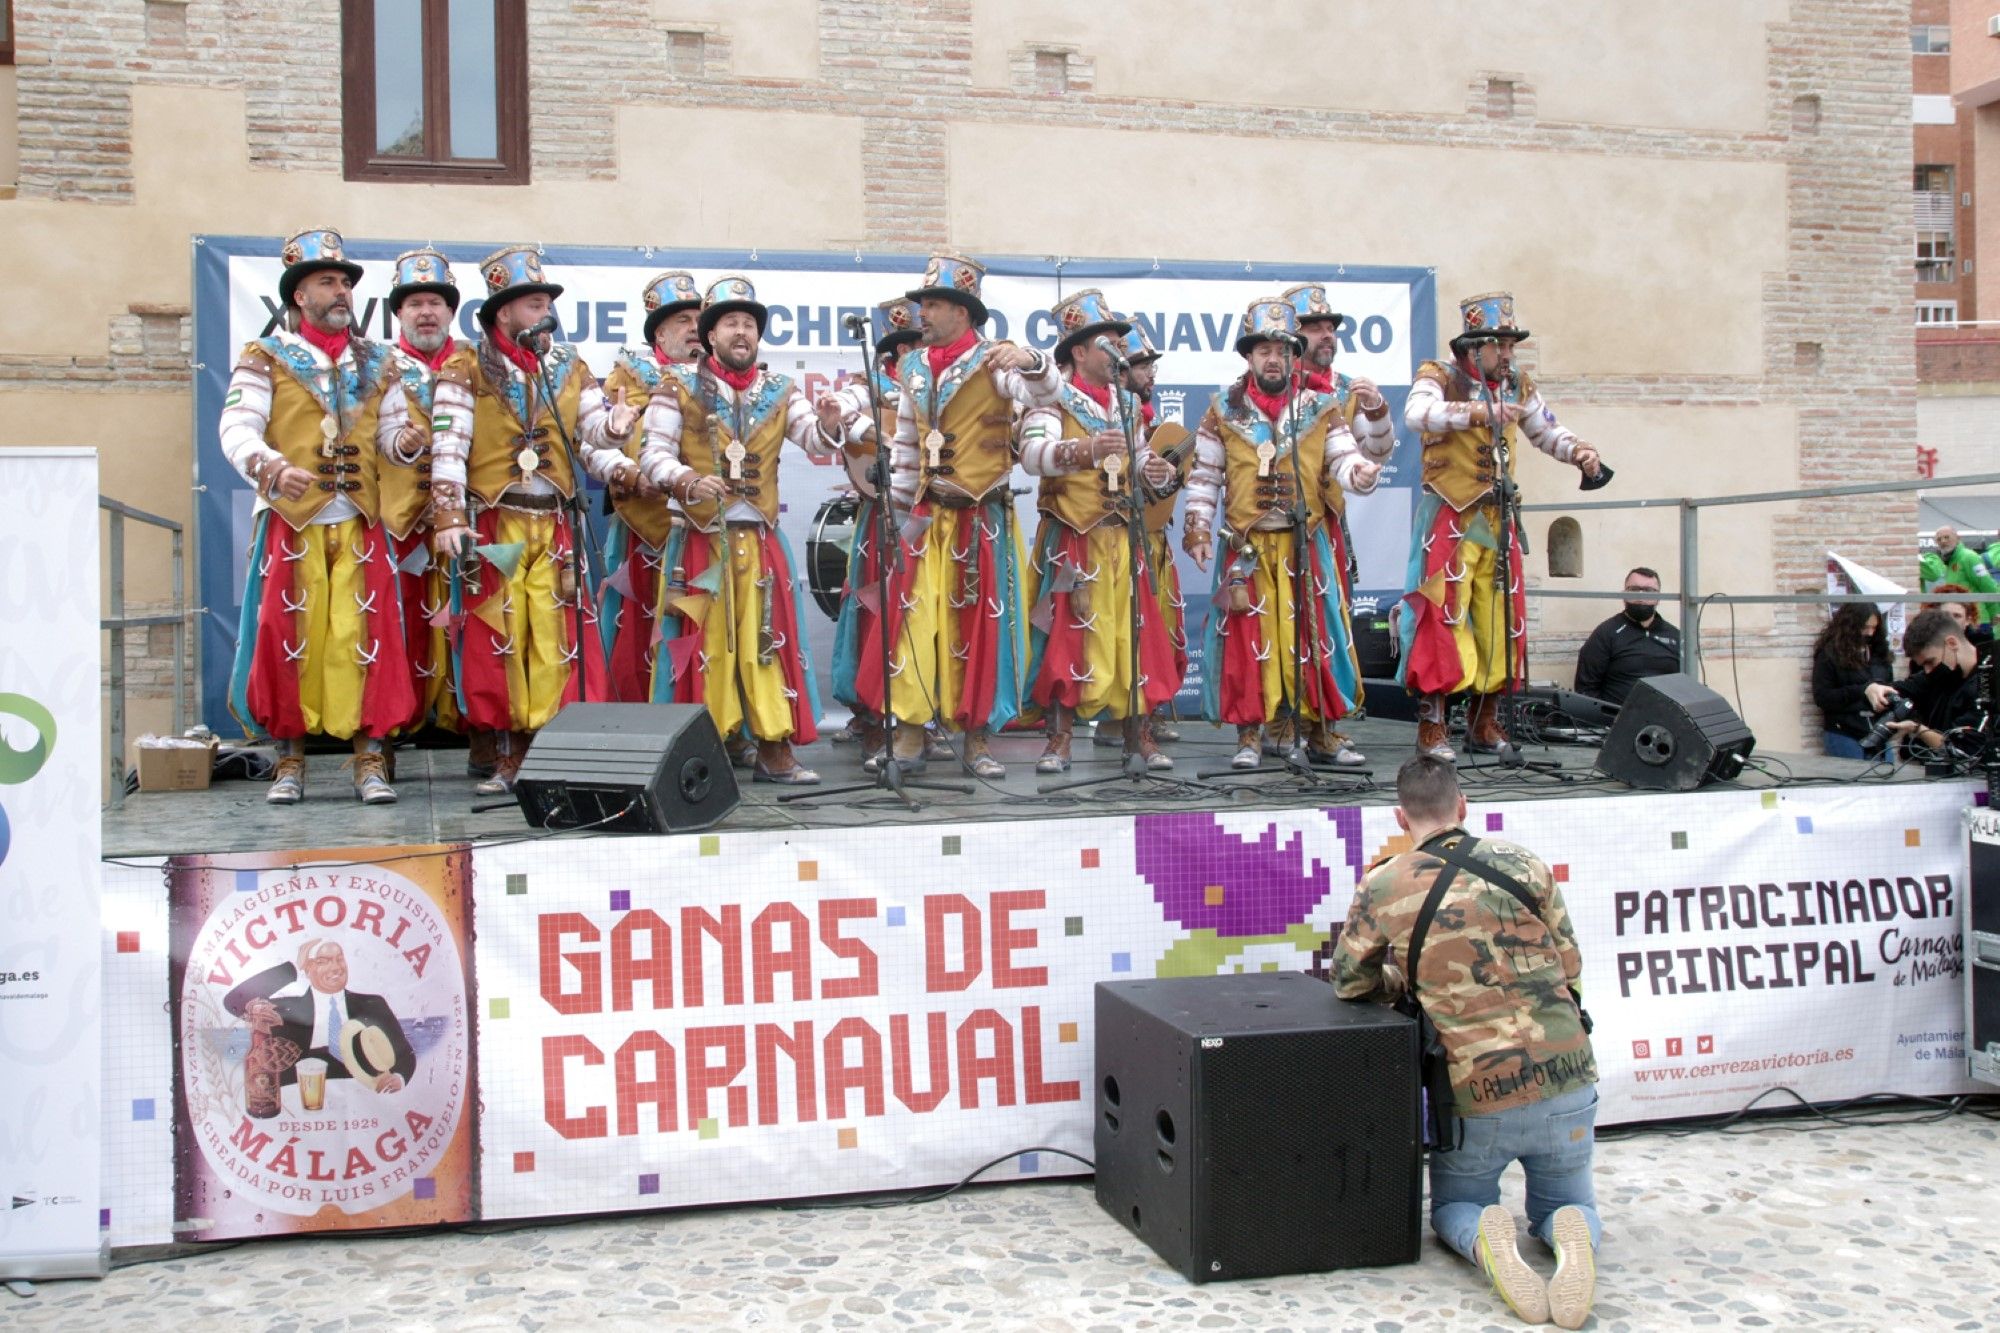 Tradicional potaje carnavalero en El Perchel: la gran previa gastronómica